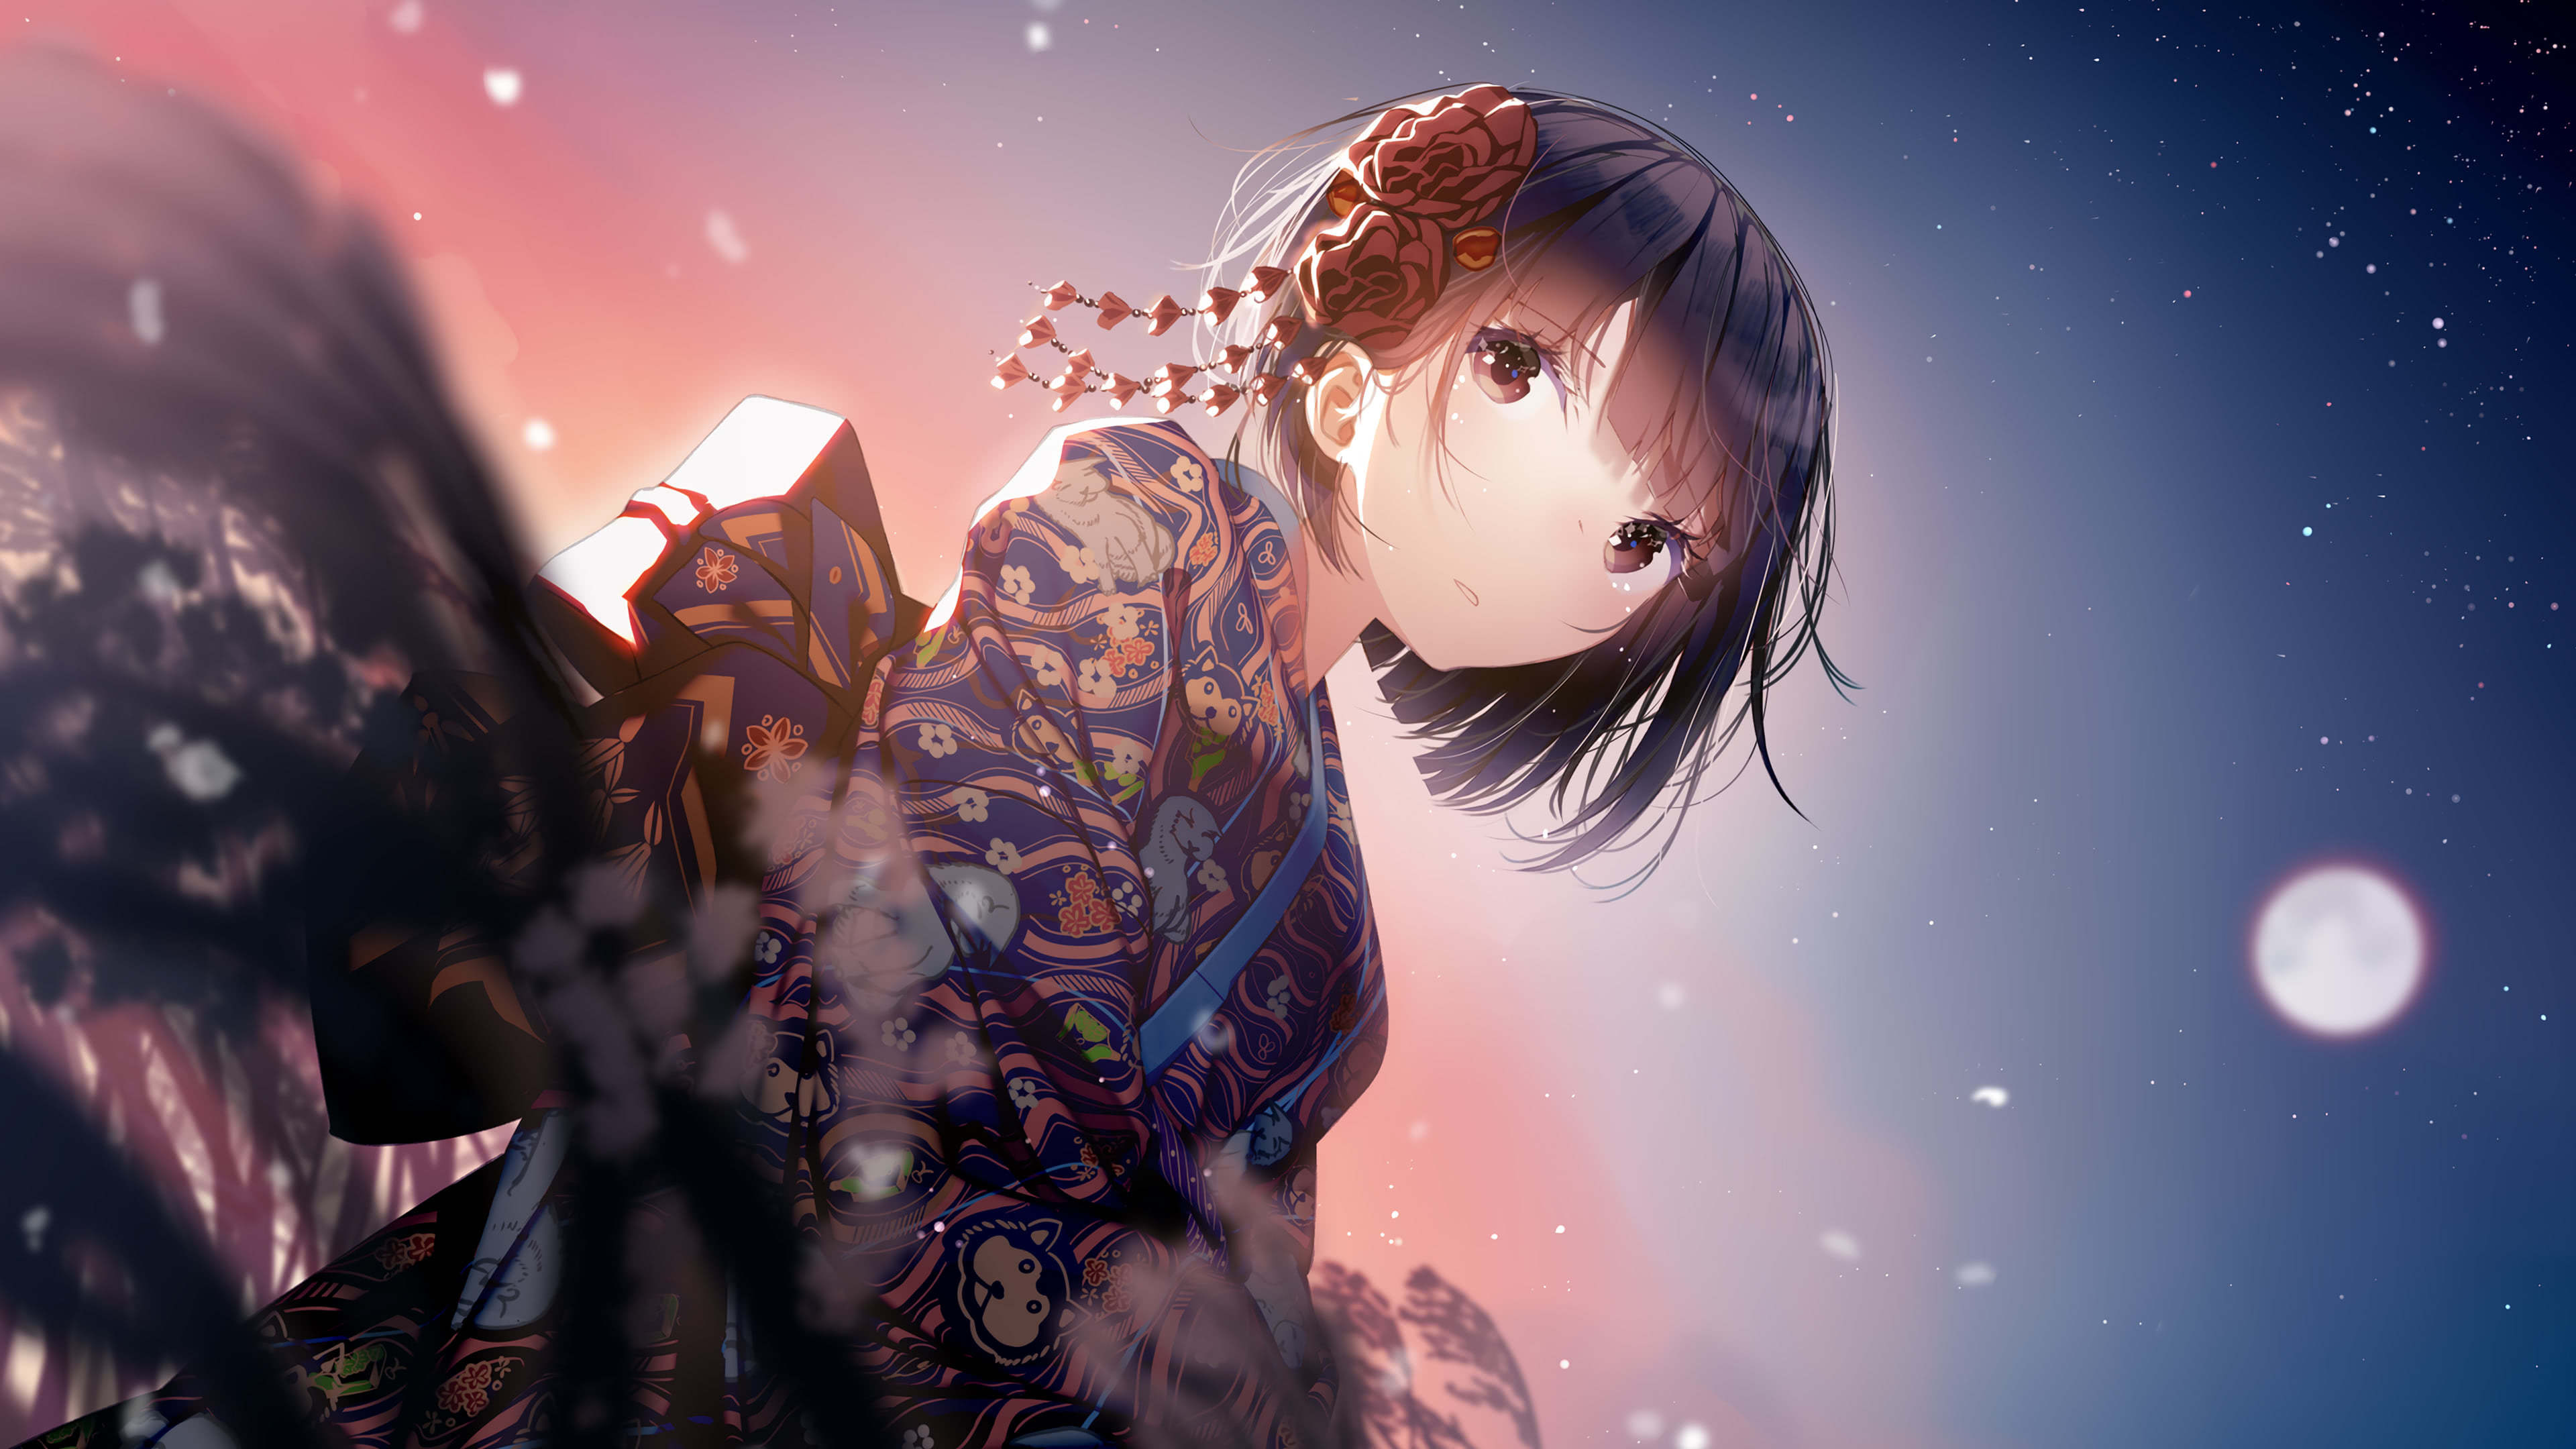 Anime girl in kimono, UHD wallpaper, 4K resolution, Japanese fashion, 3840x2160 4K Desktop